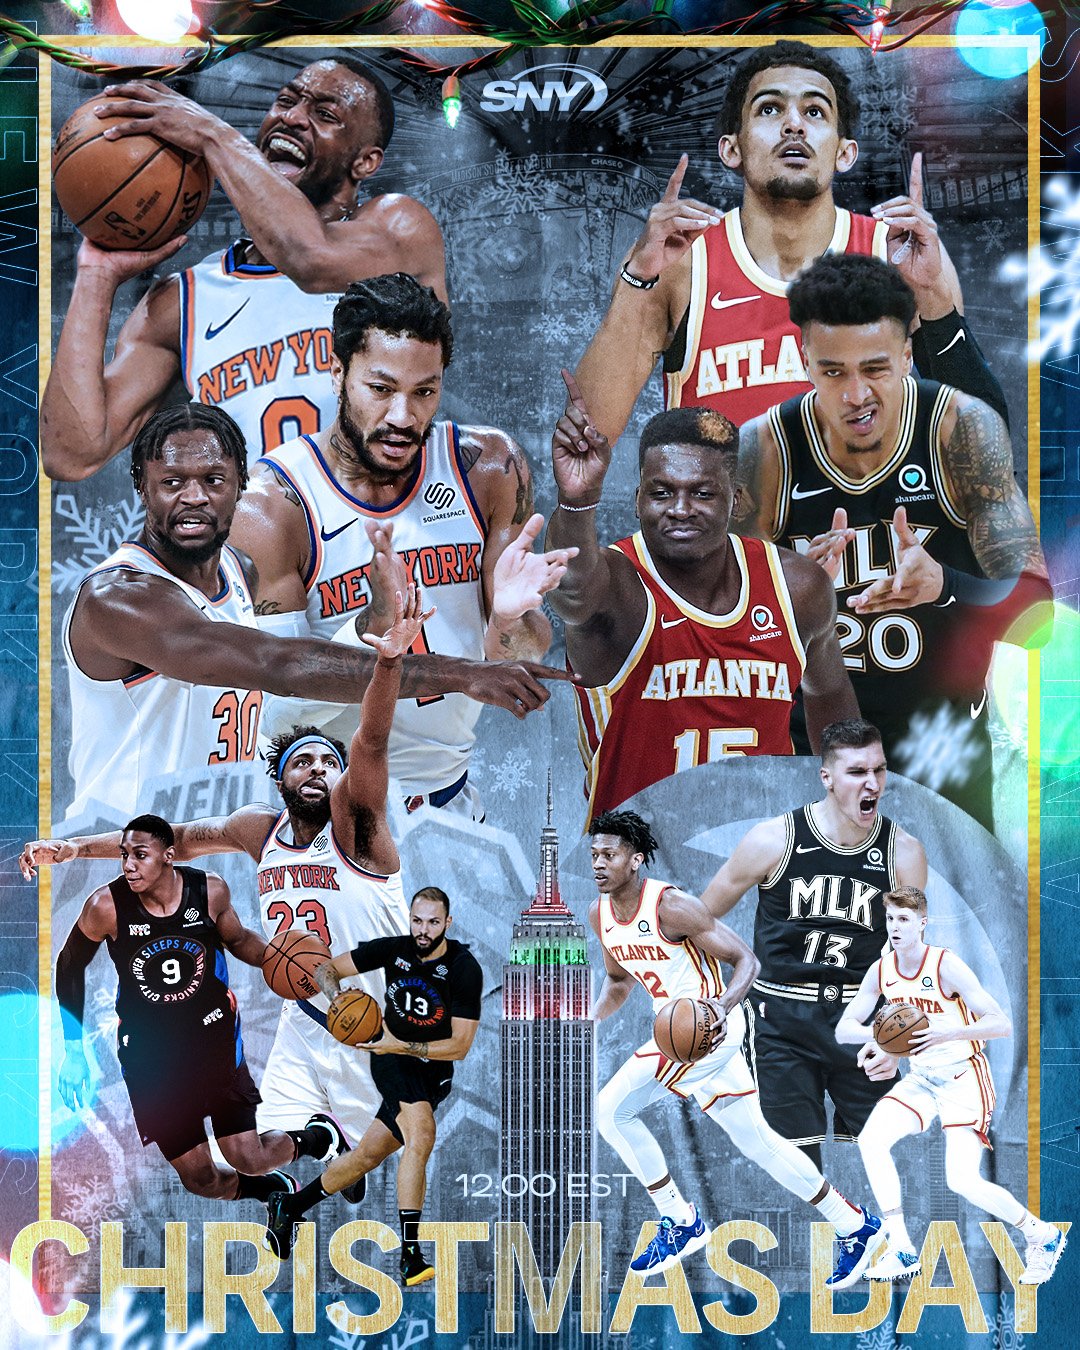 091721-NewyorkKnicks-Atlanta Hawks-ChristmasDay-FINAL.jpg